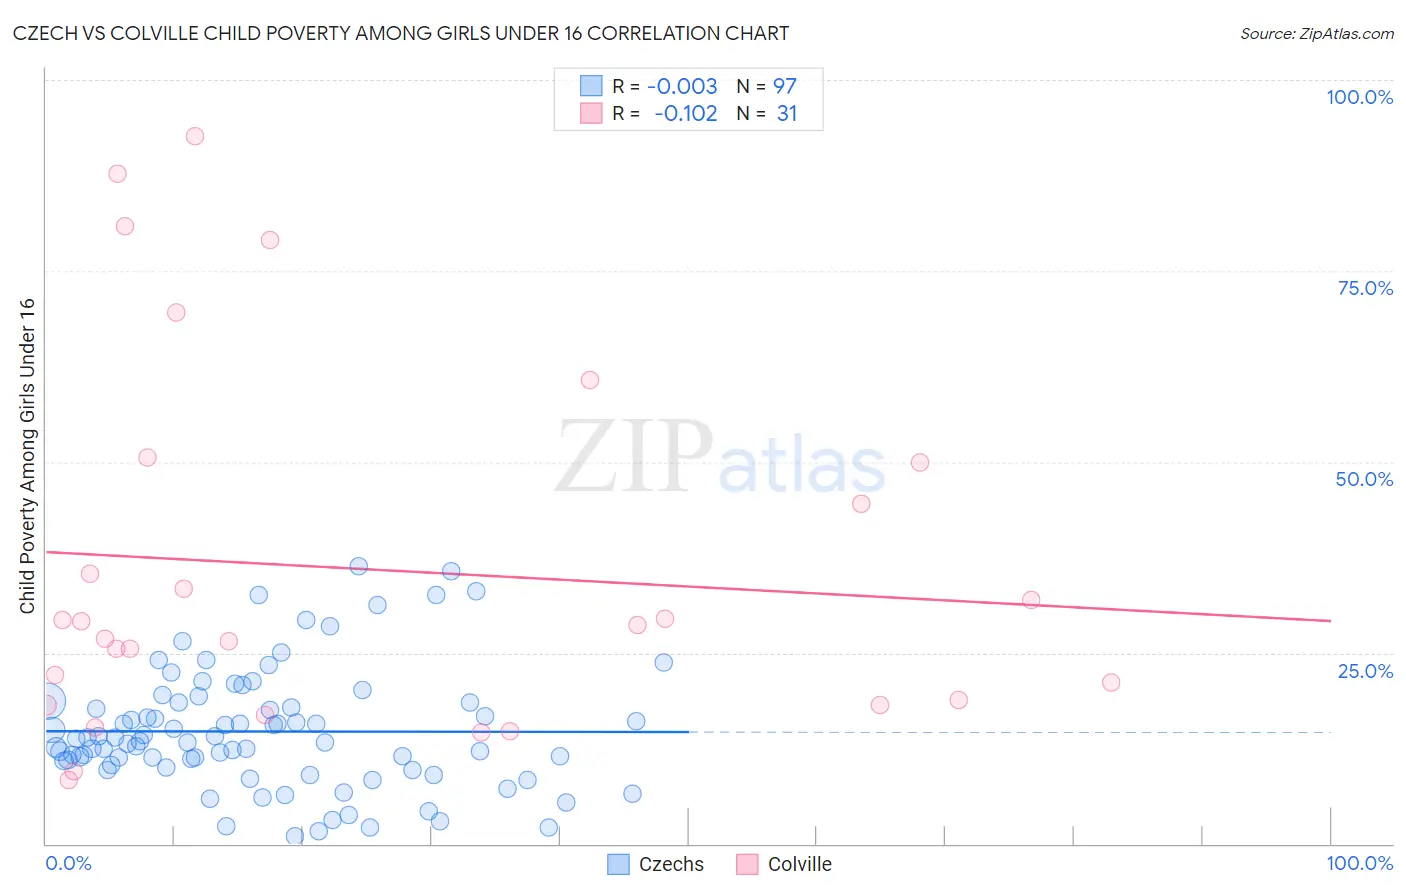 Czech vs Colville Child Poverty Among Girls Under 16